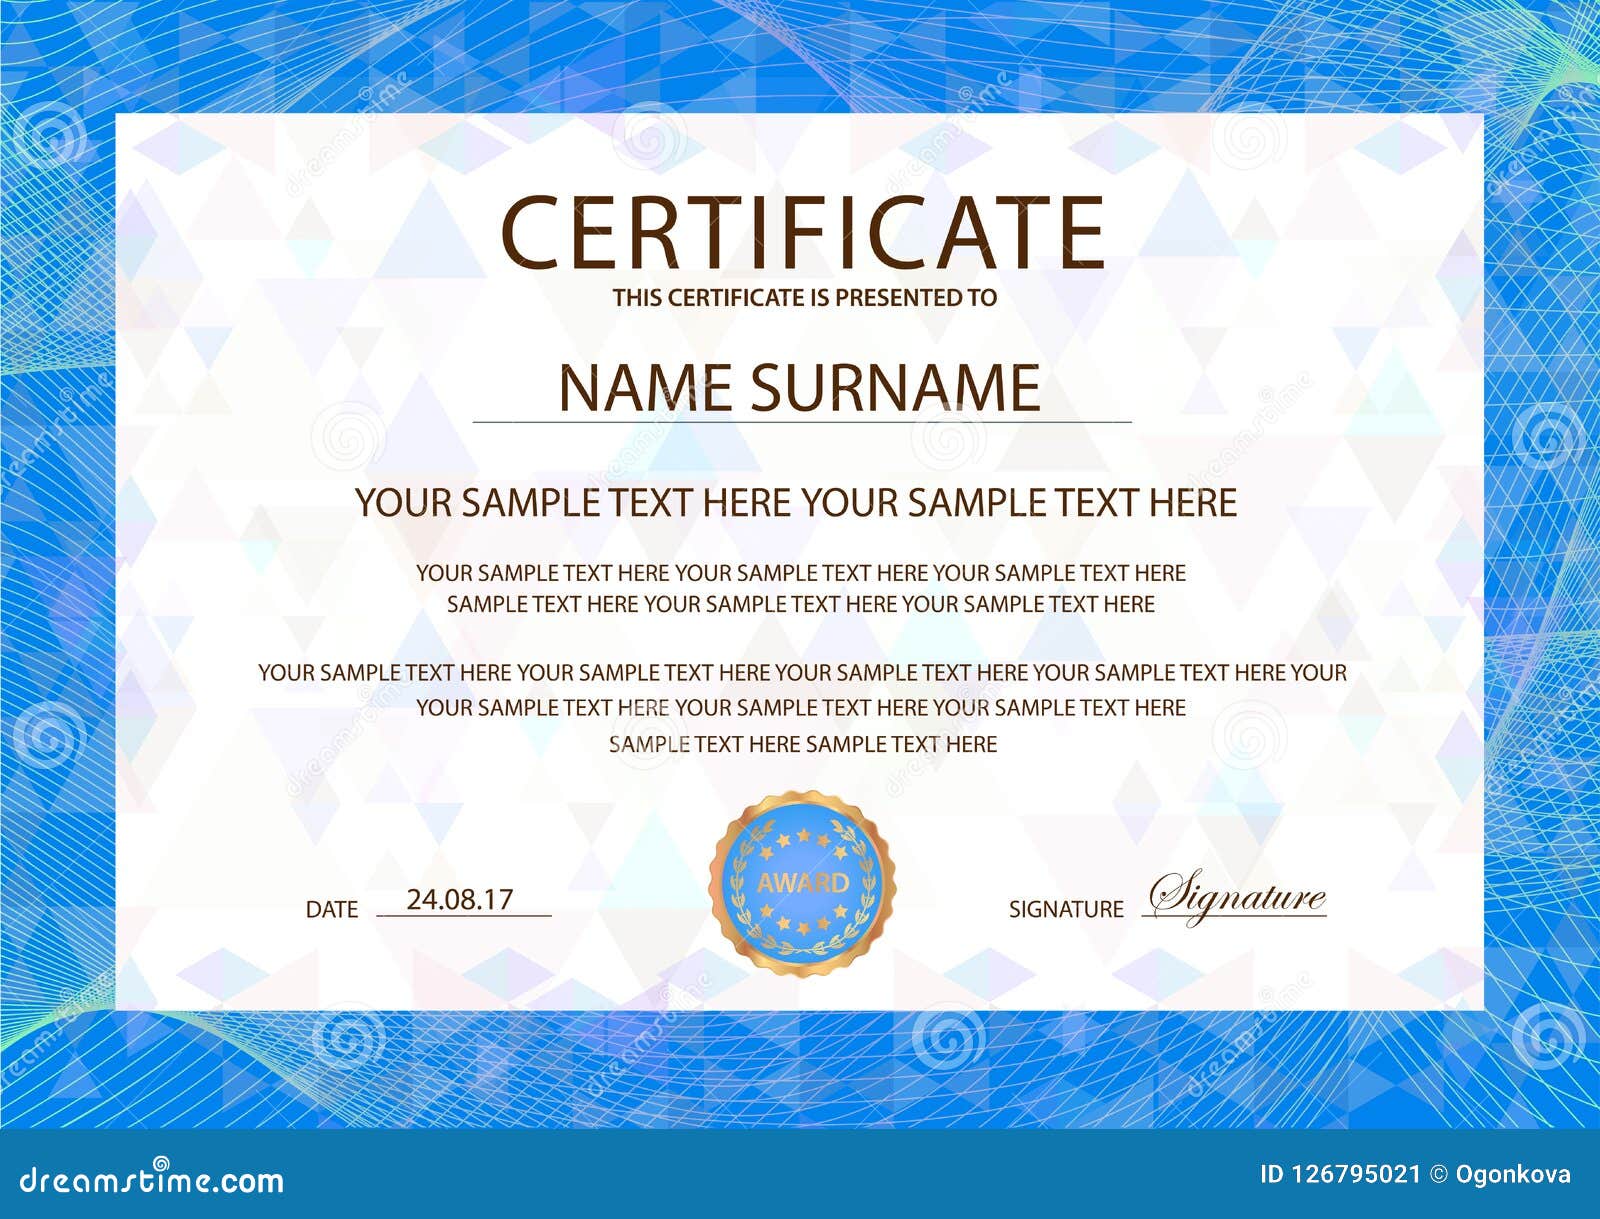 Certificate Vector Template. Formal Secured Blue Border Guilloche Inside Formal Certificate Of Appreciation Template